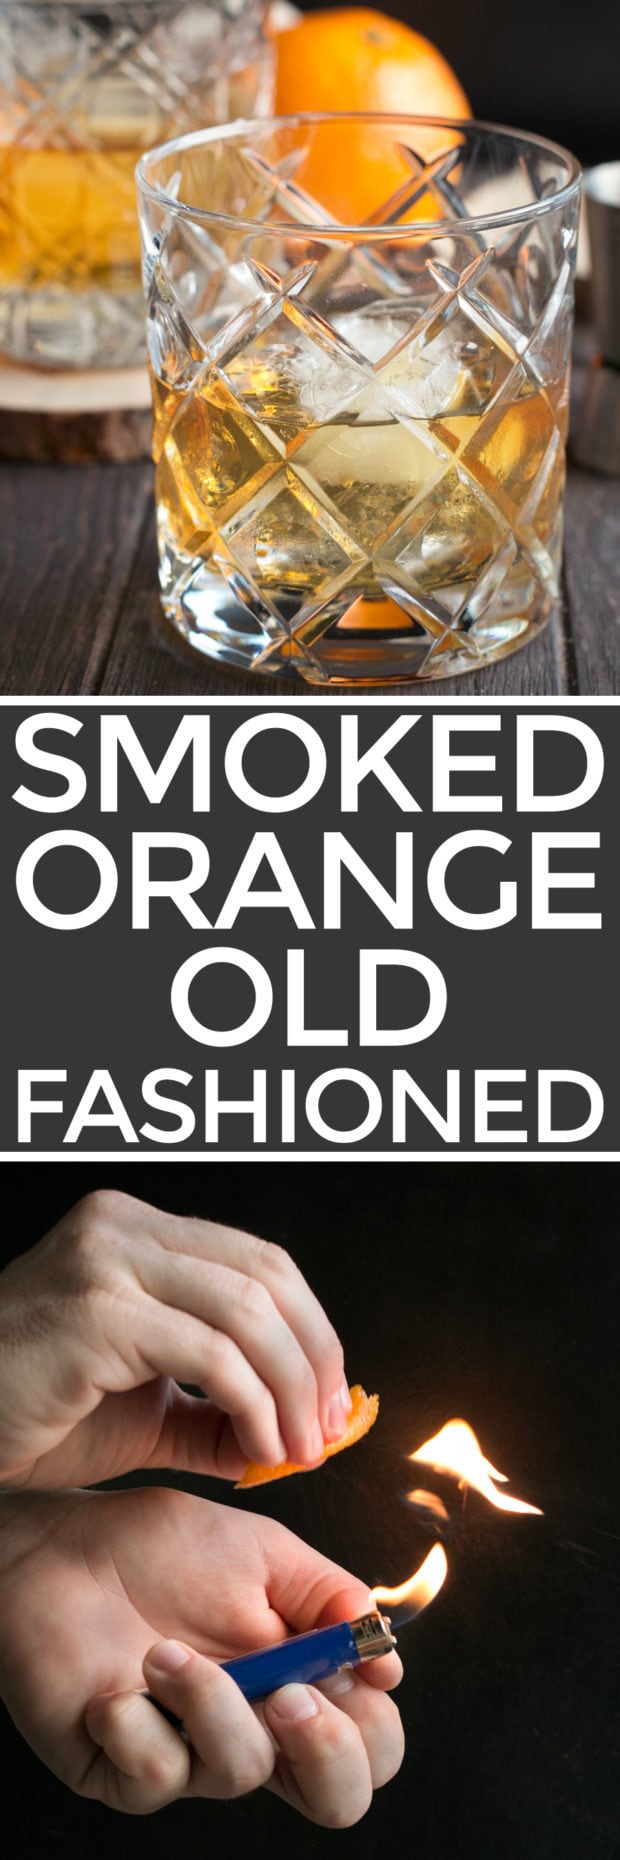 Smoked Orange Old Fashioned